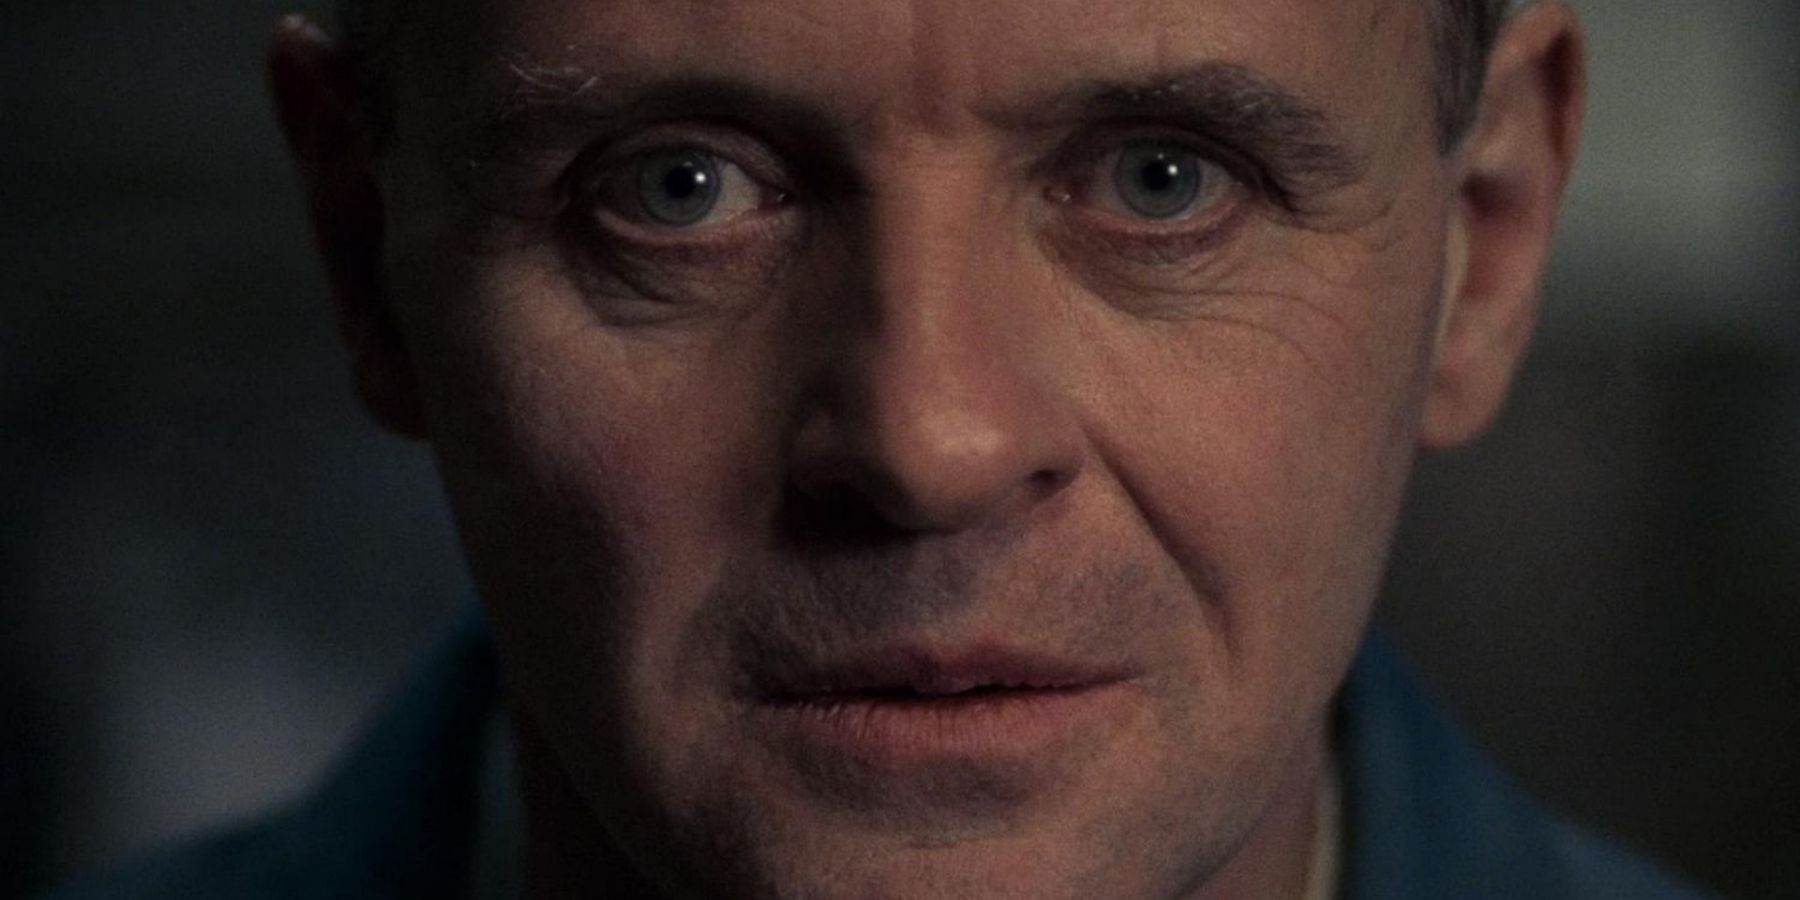 Hannibal Lecter's eyes